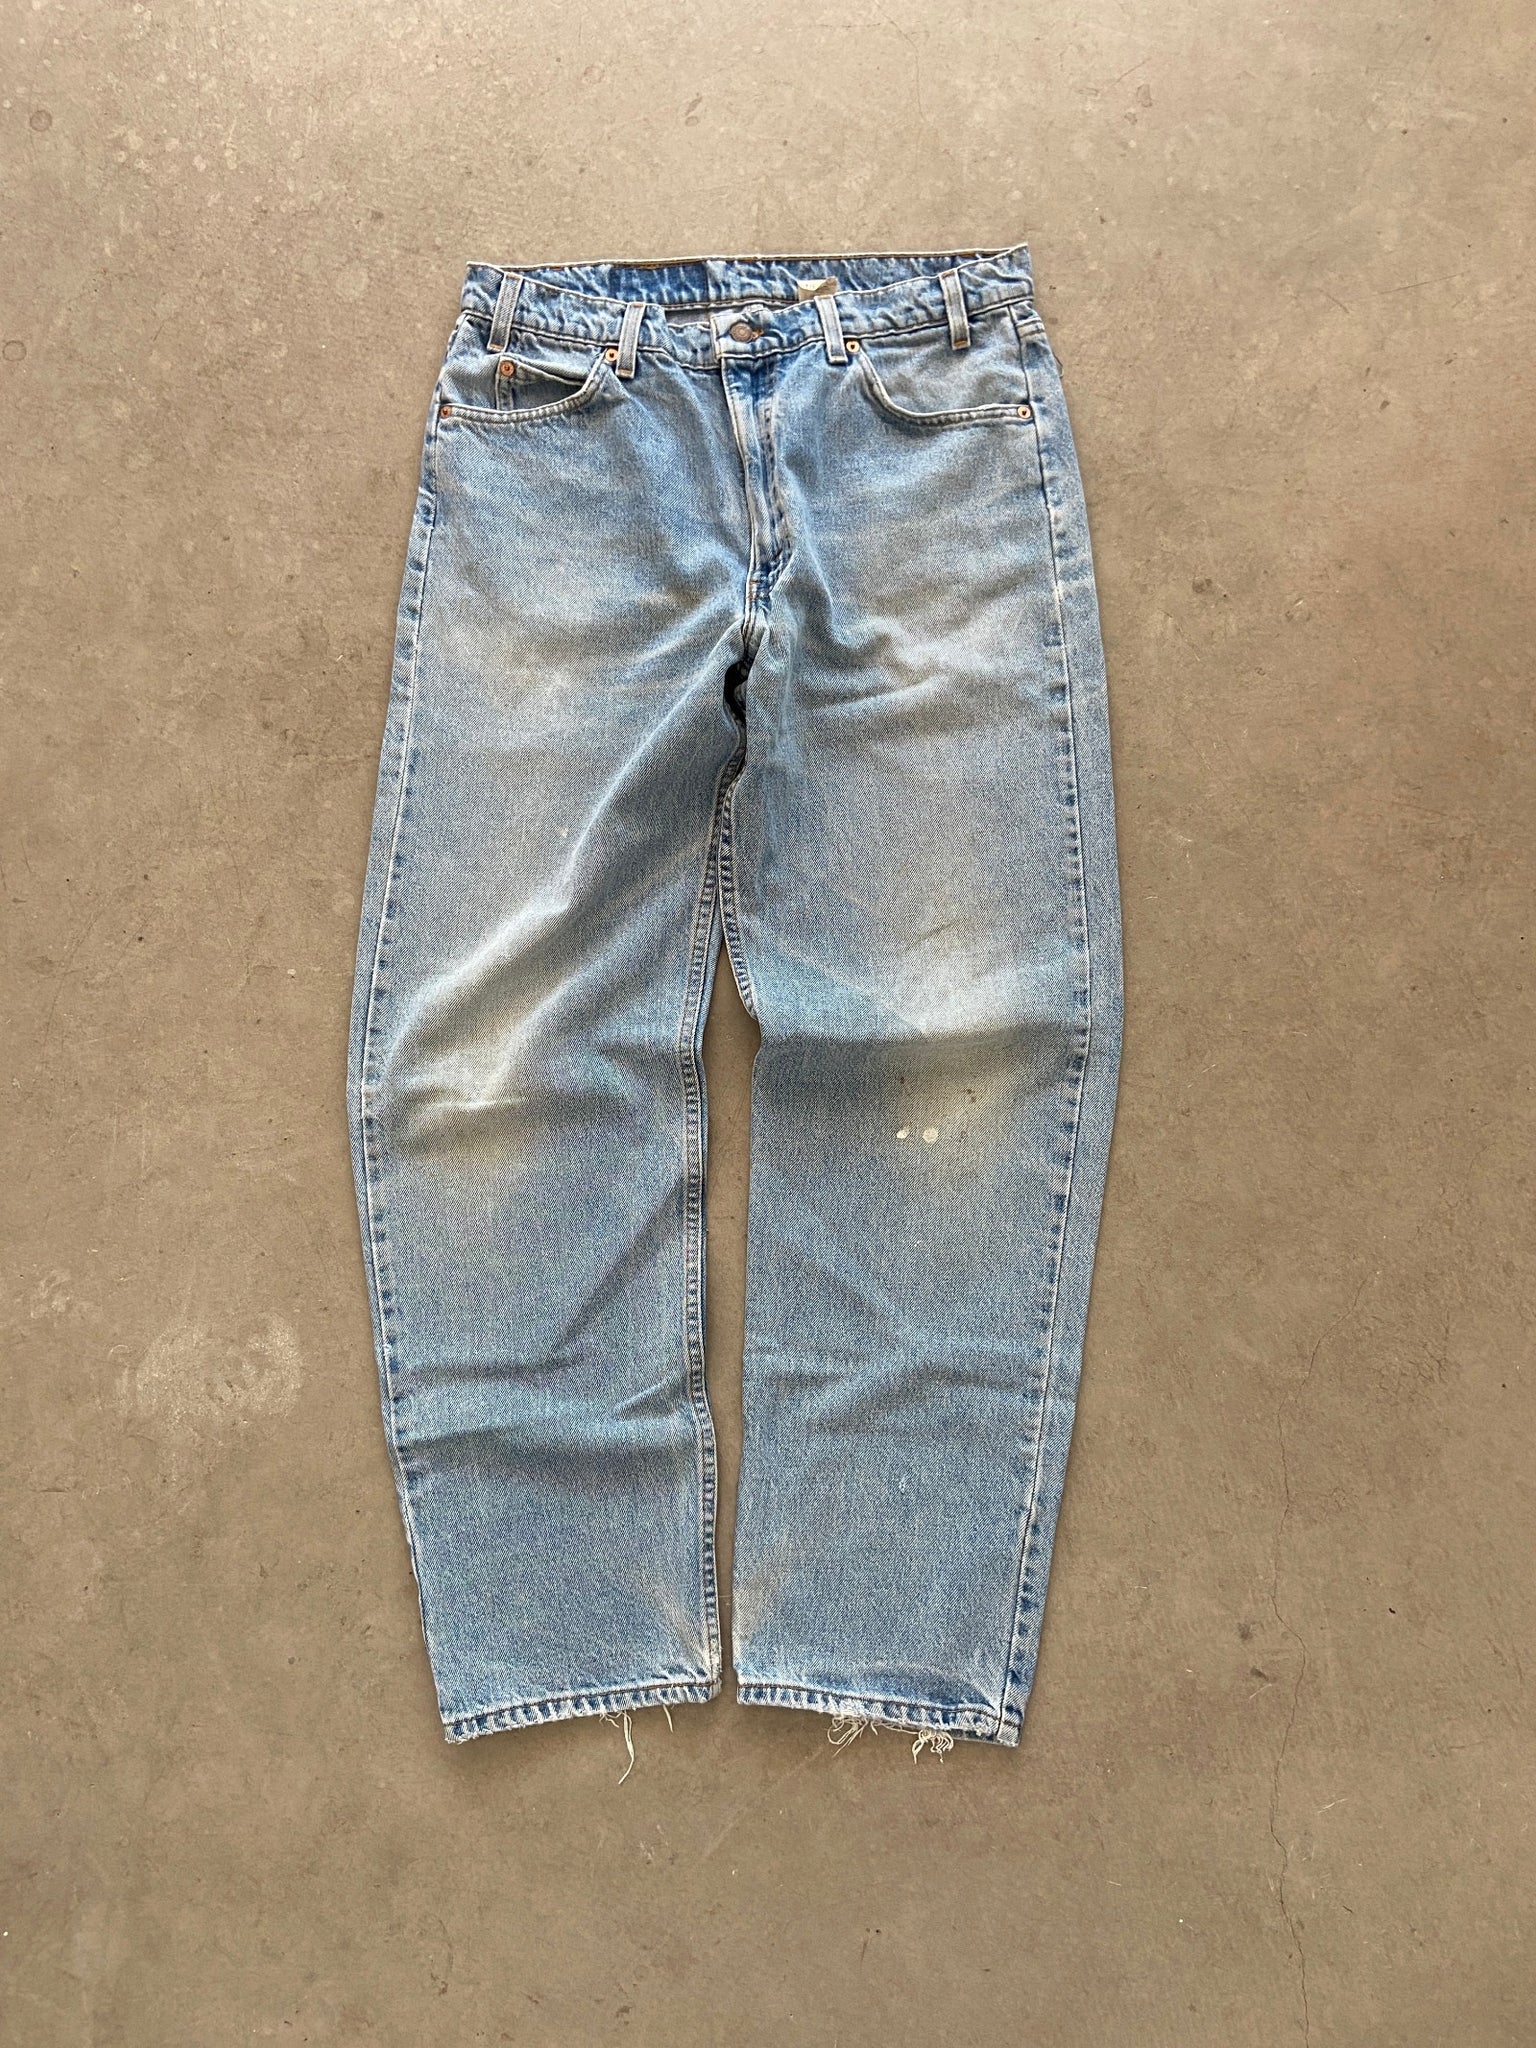 1997 Levi's 550 Orange Tab Jeans - 36 x 32